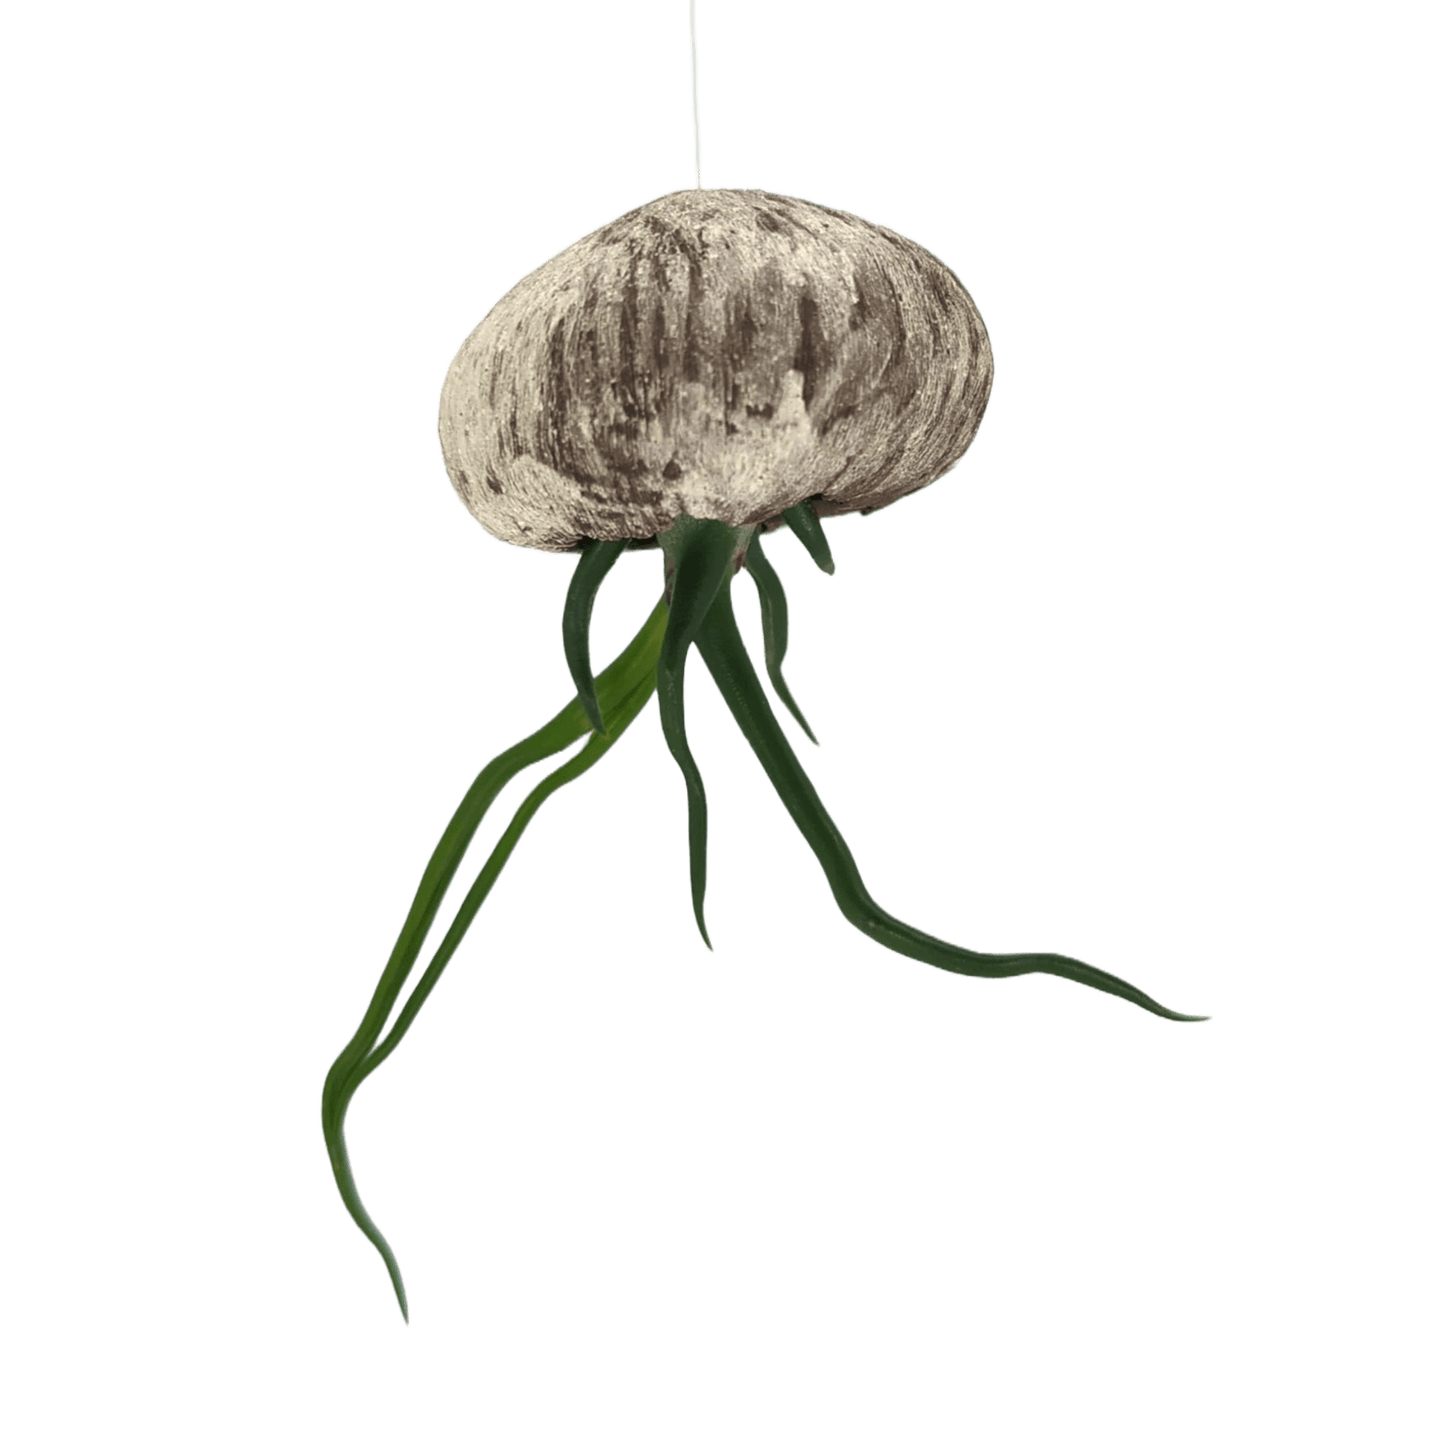 jellyfish - Mud and Plants